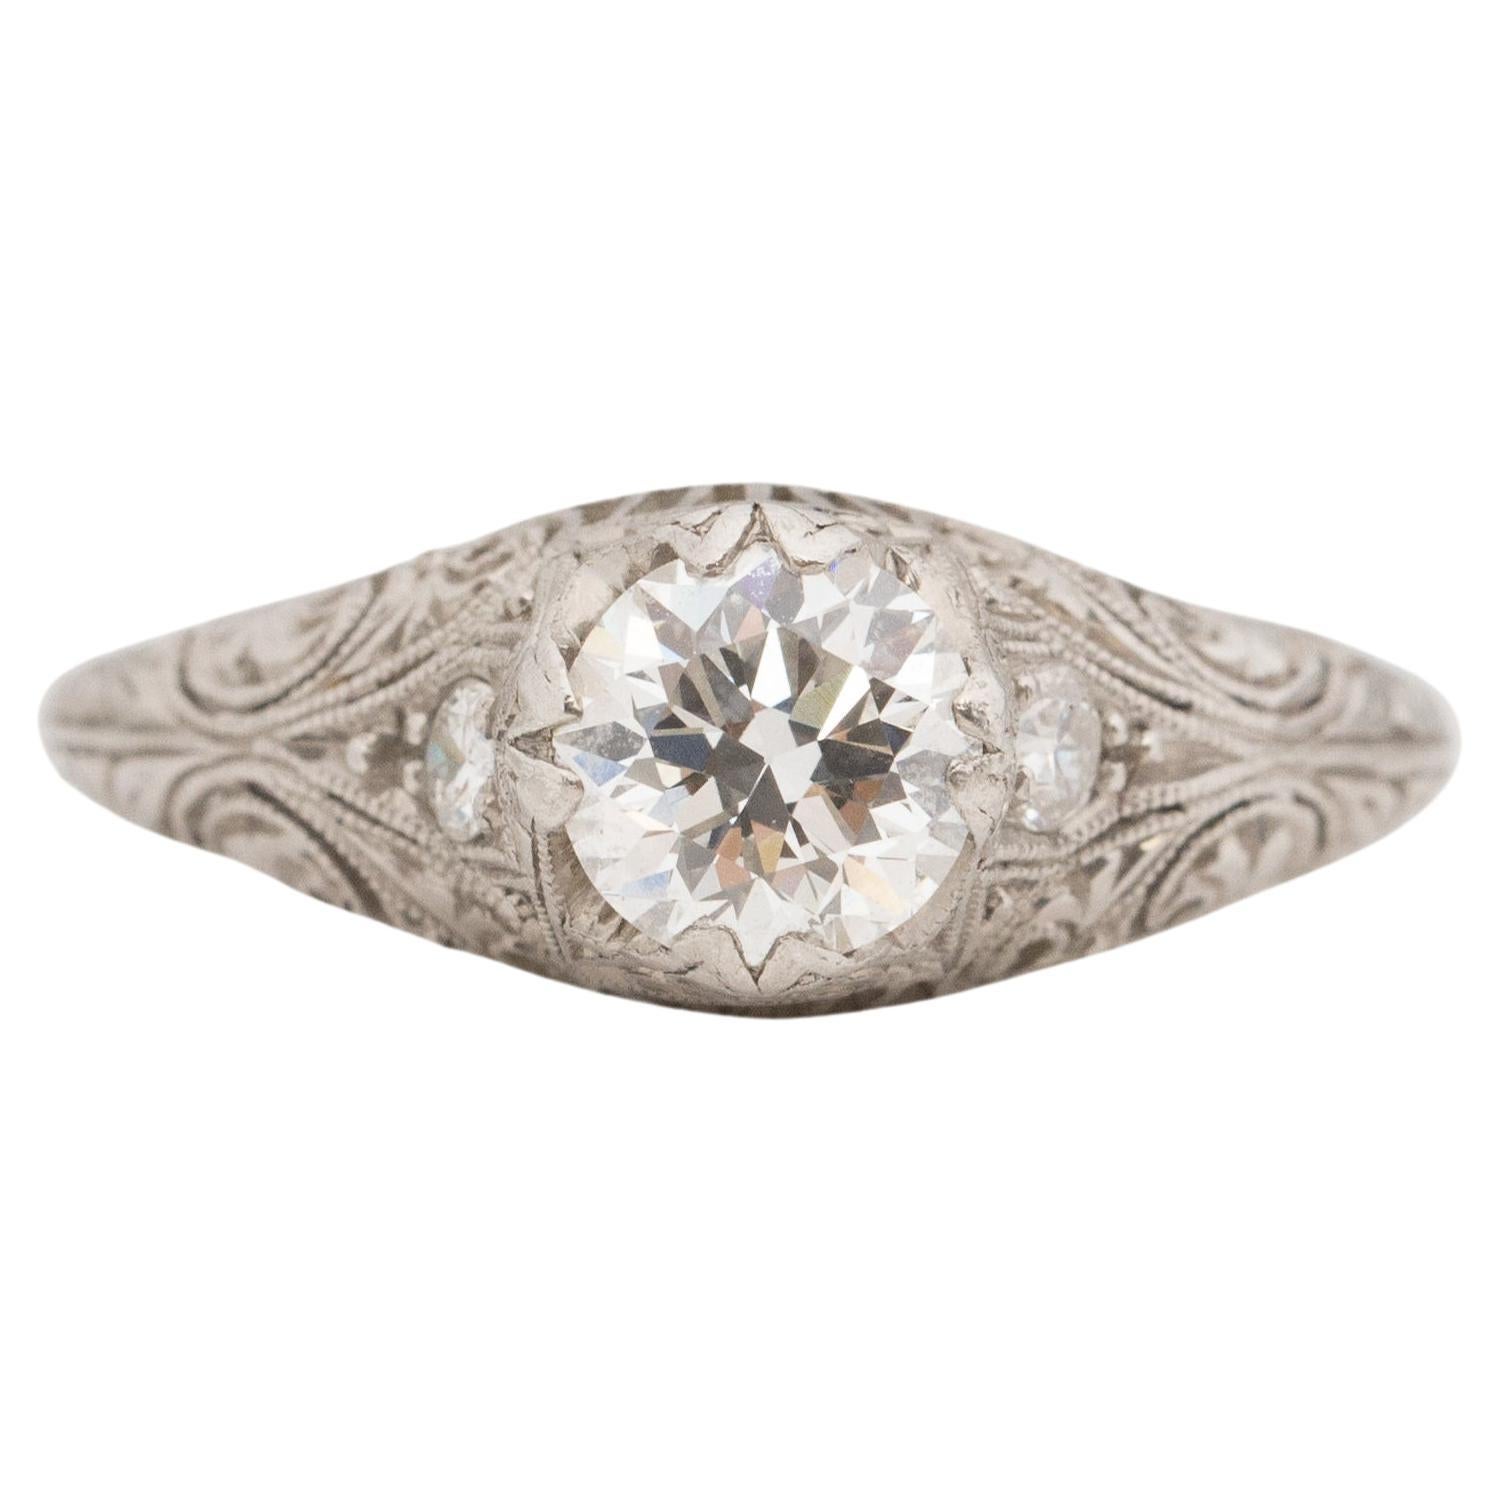 .90 Carat Total Weight Art Deco Platinum Engagement Ring